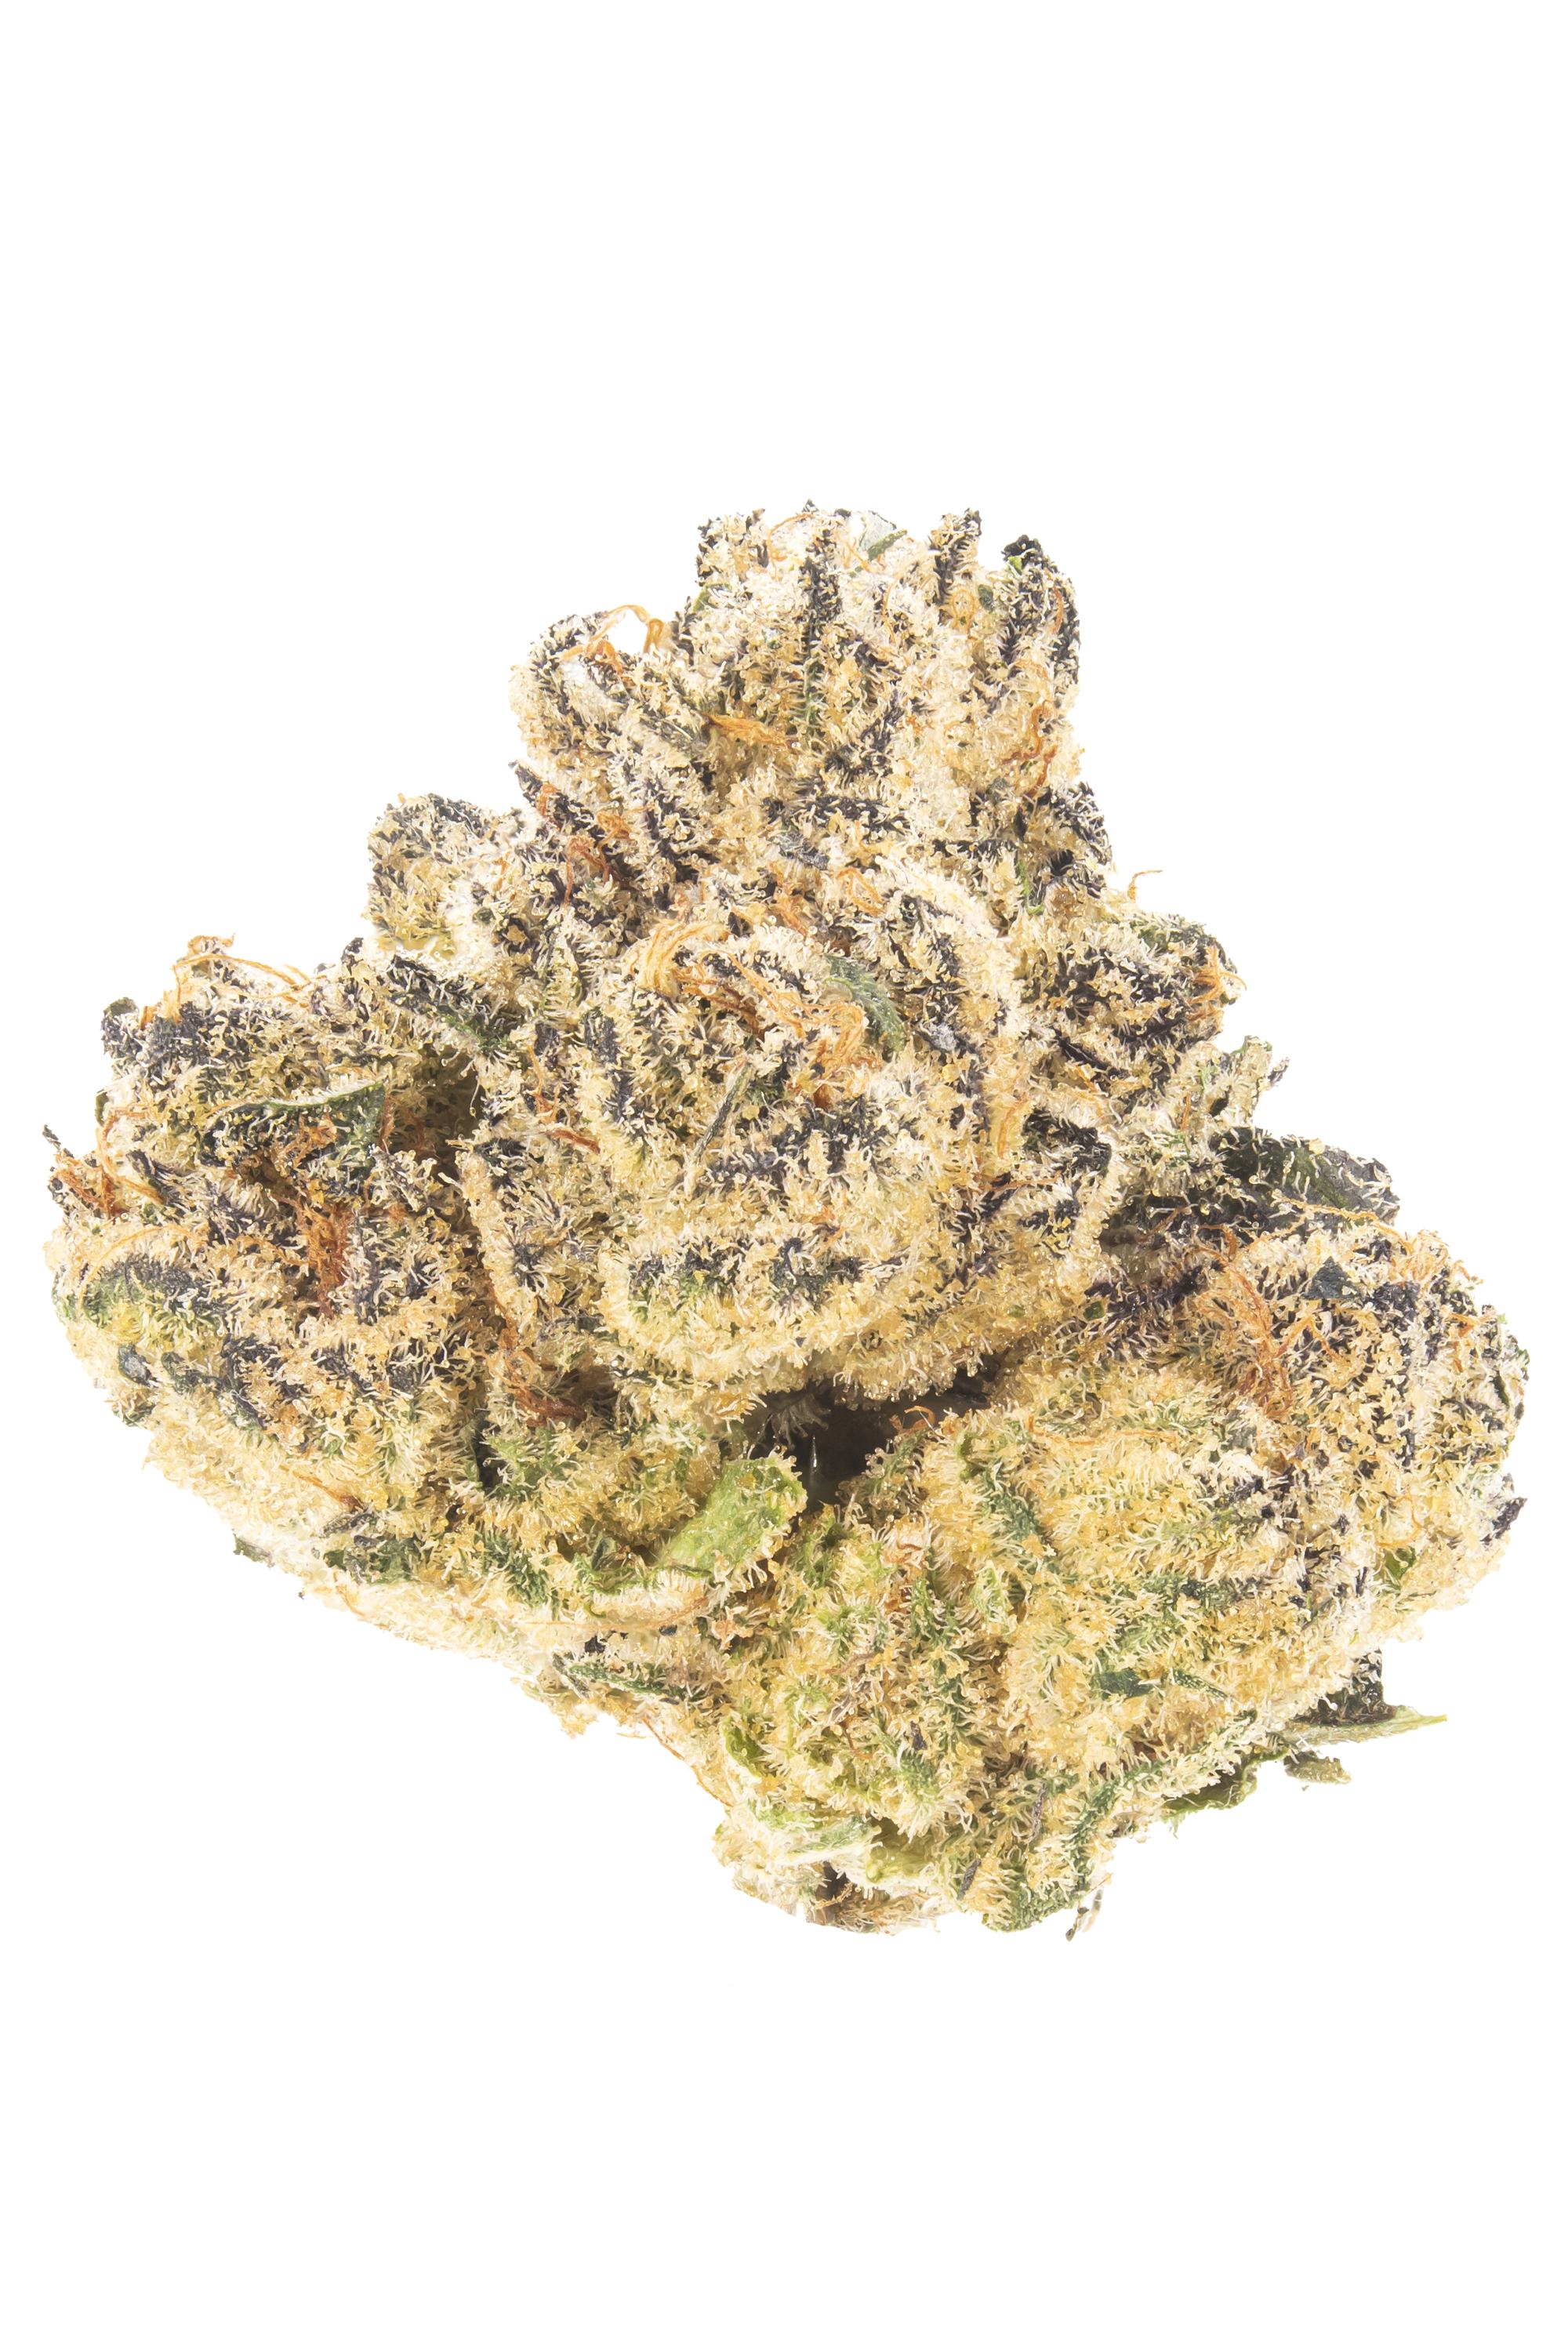 Sin Mint Cookies - Hybrid Cannabis Strain